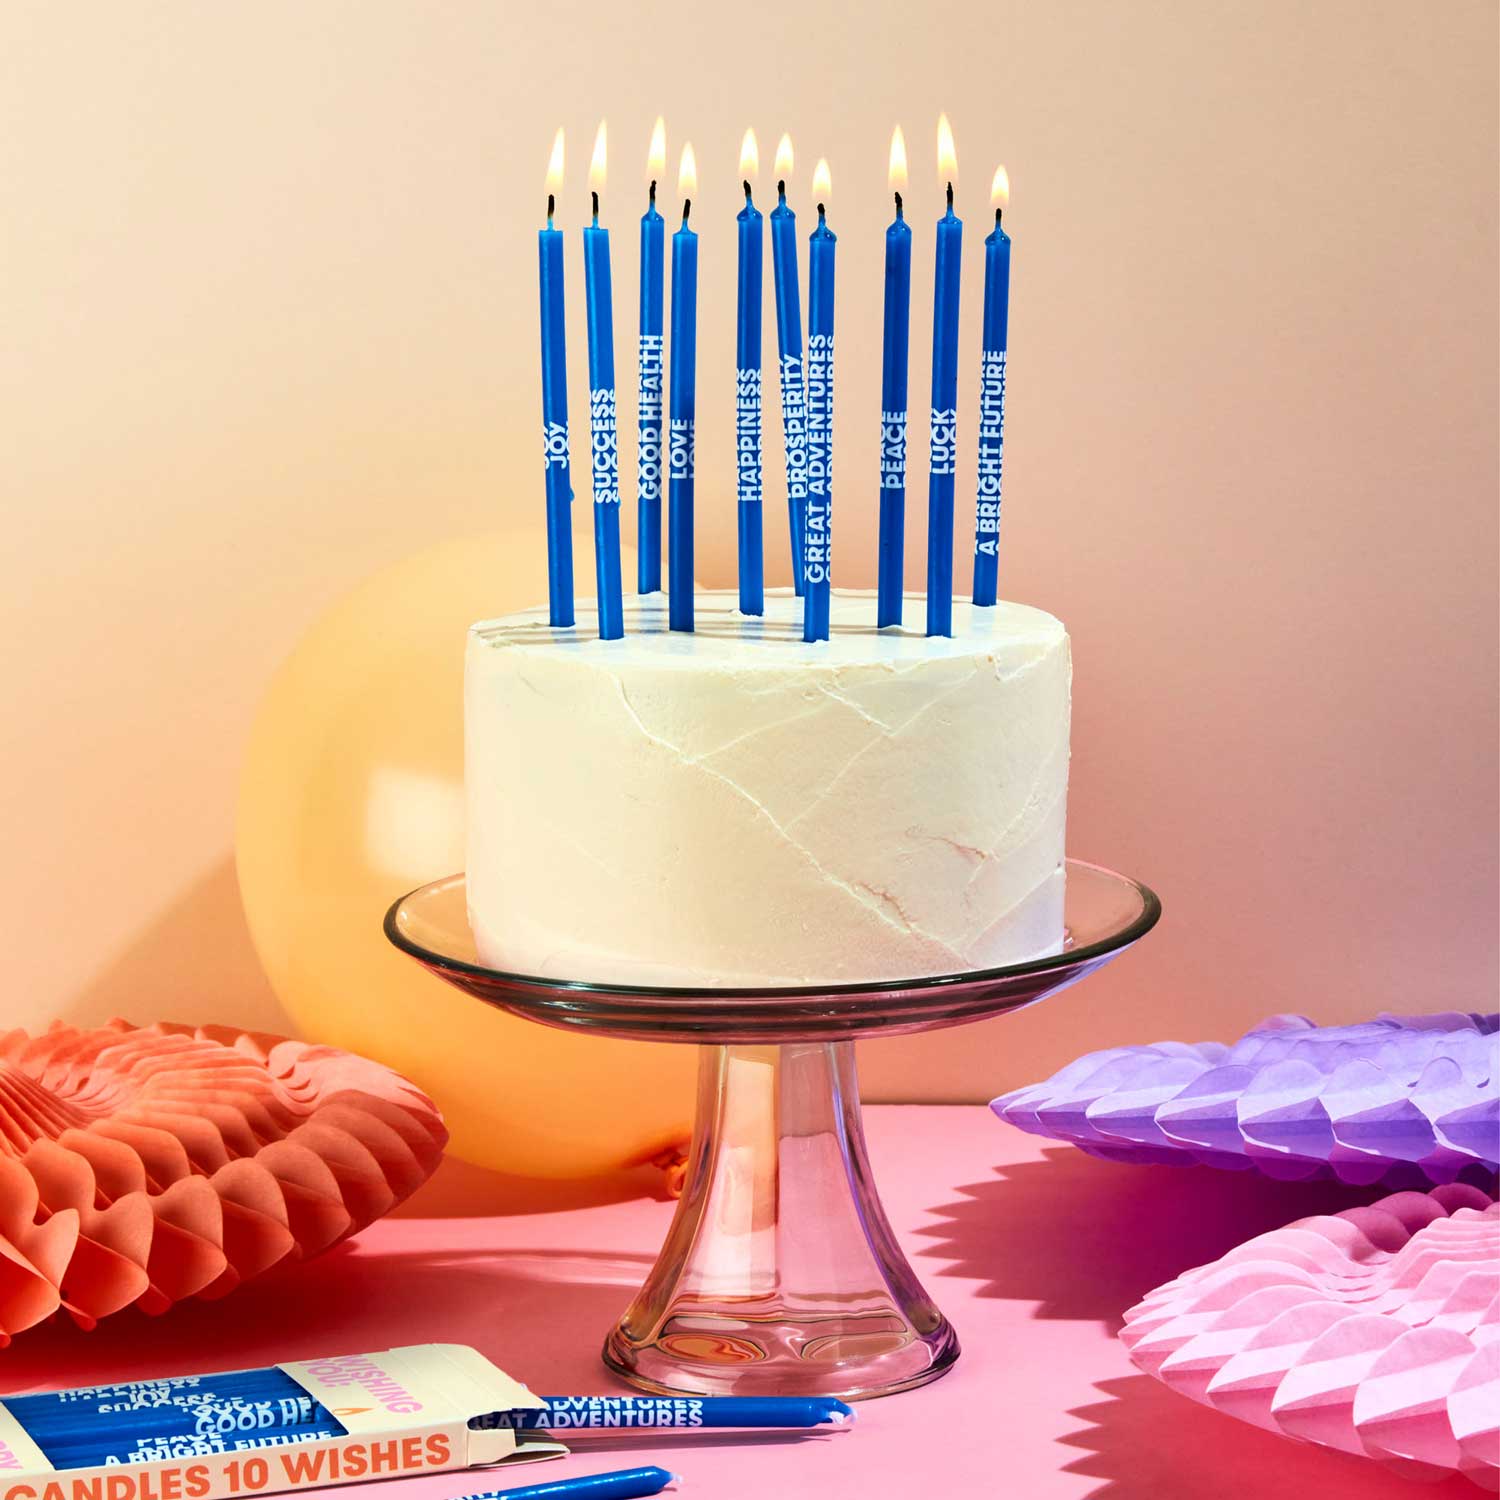 Wishing You: Birthday Candles - Purple